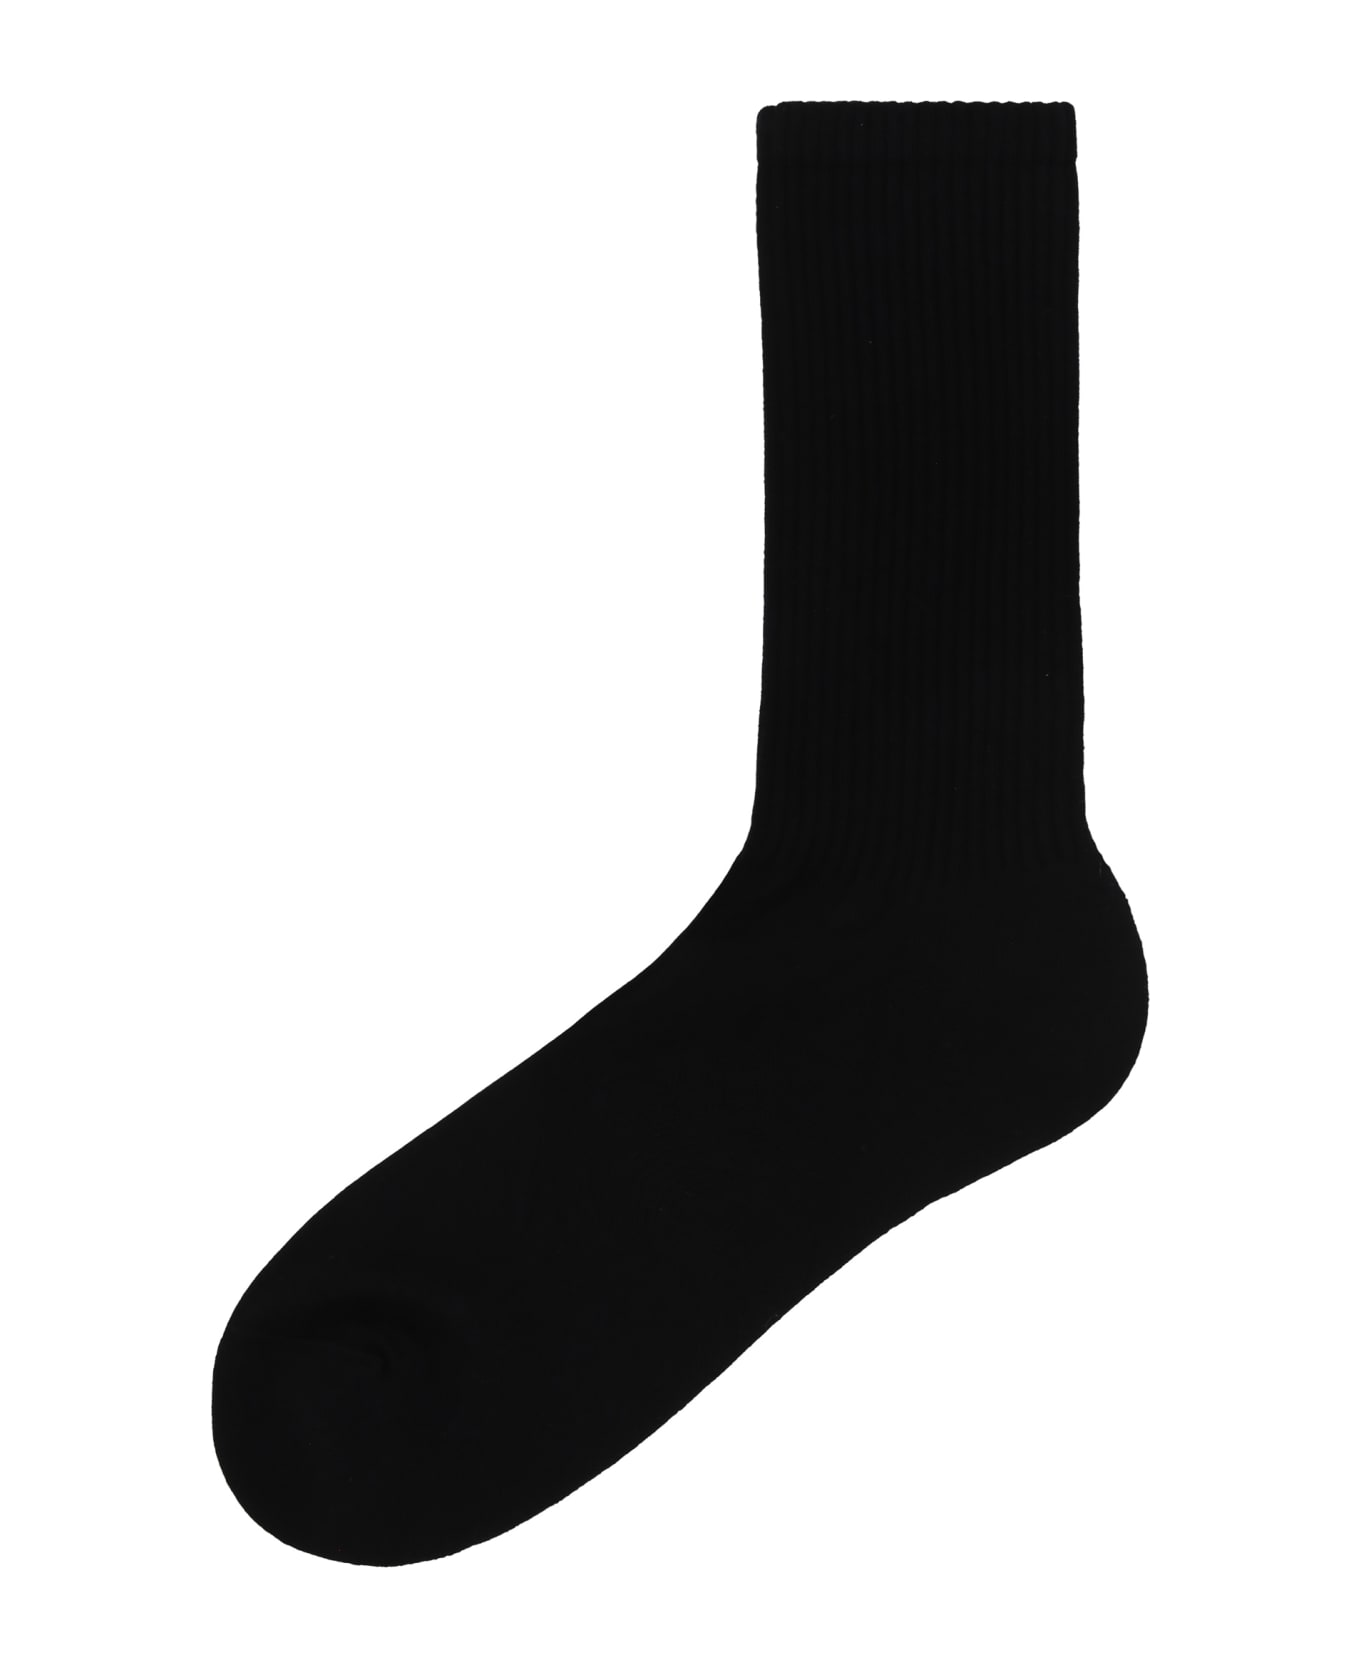 Off-White Big Logo Bksh Mid Calf Socks - Black White 靴下